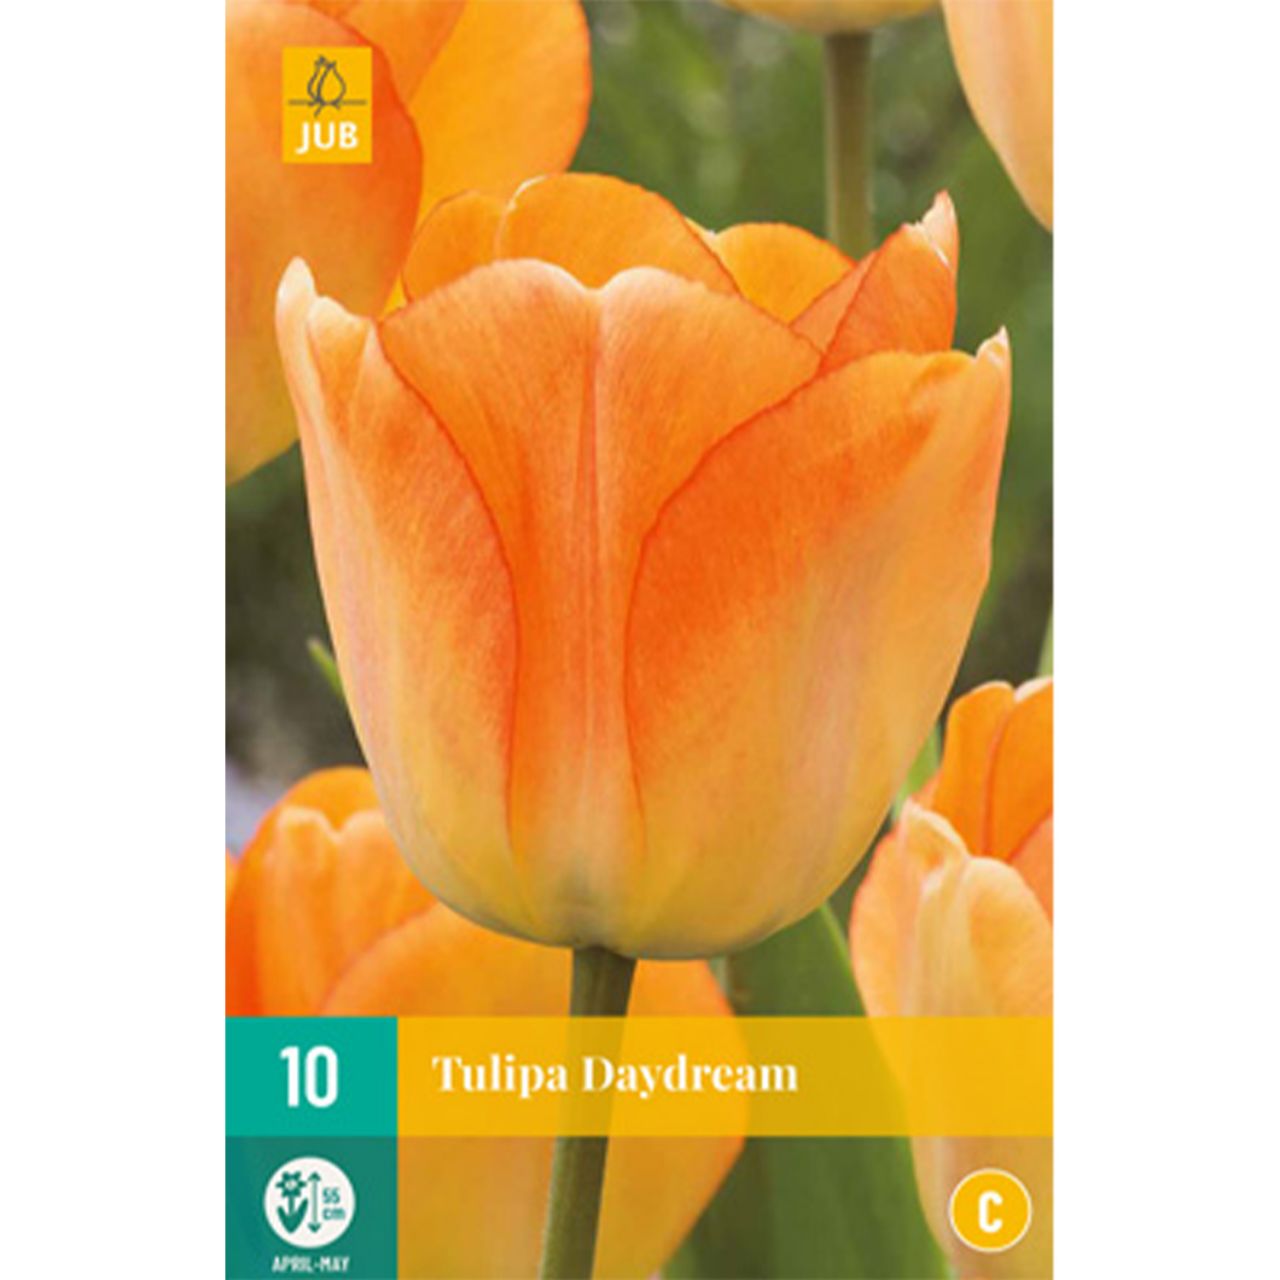 Kategorie <b>Herbst-Blumenzwiebeln </b> - Darwin-Hybrid Tulpe 'Daydream' - 10 Stück - Tulipa 'Daydream'